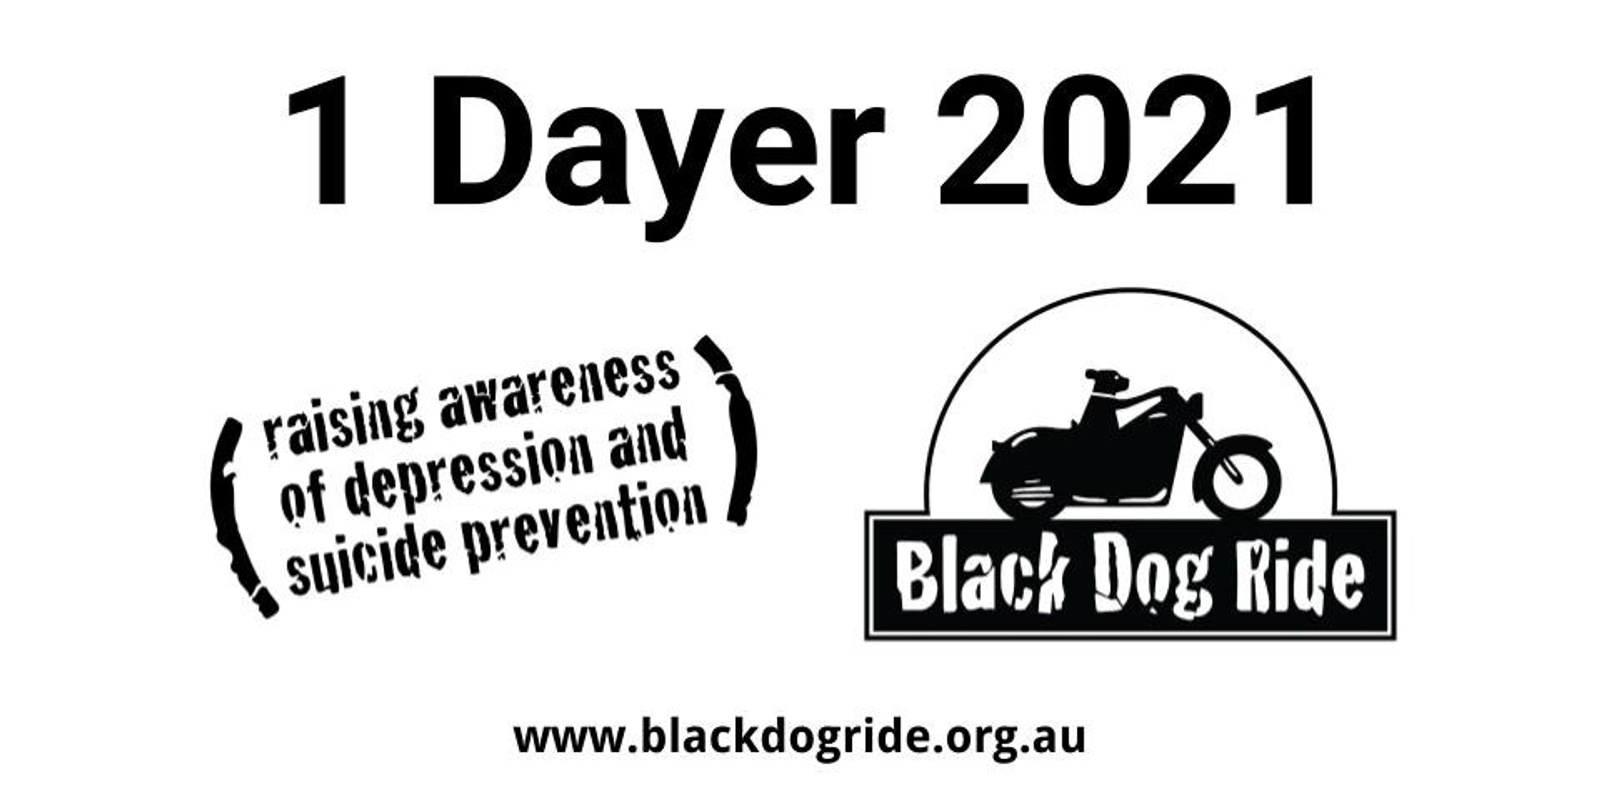 Banner image for Wide Bay Burnett - QLD - Black Dog Ride 1 Dayer 2021